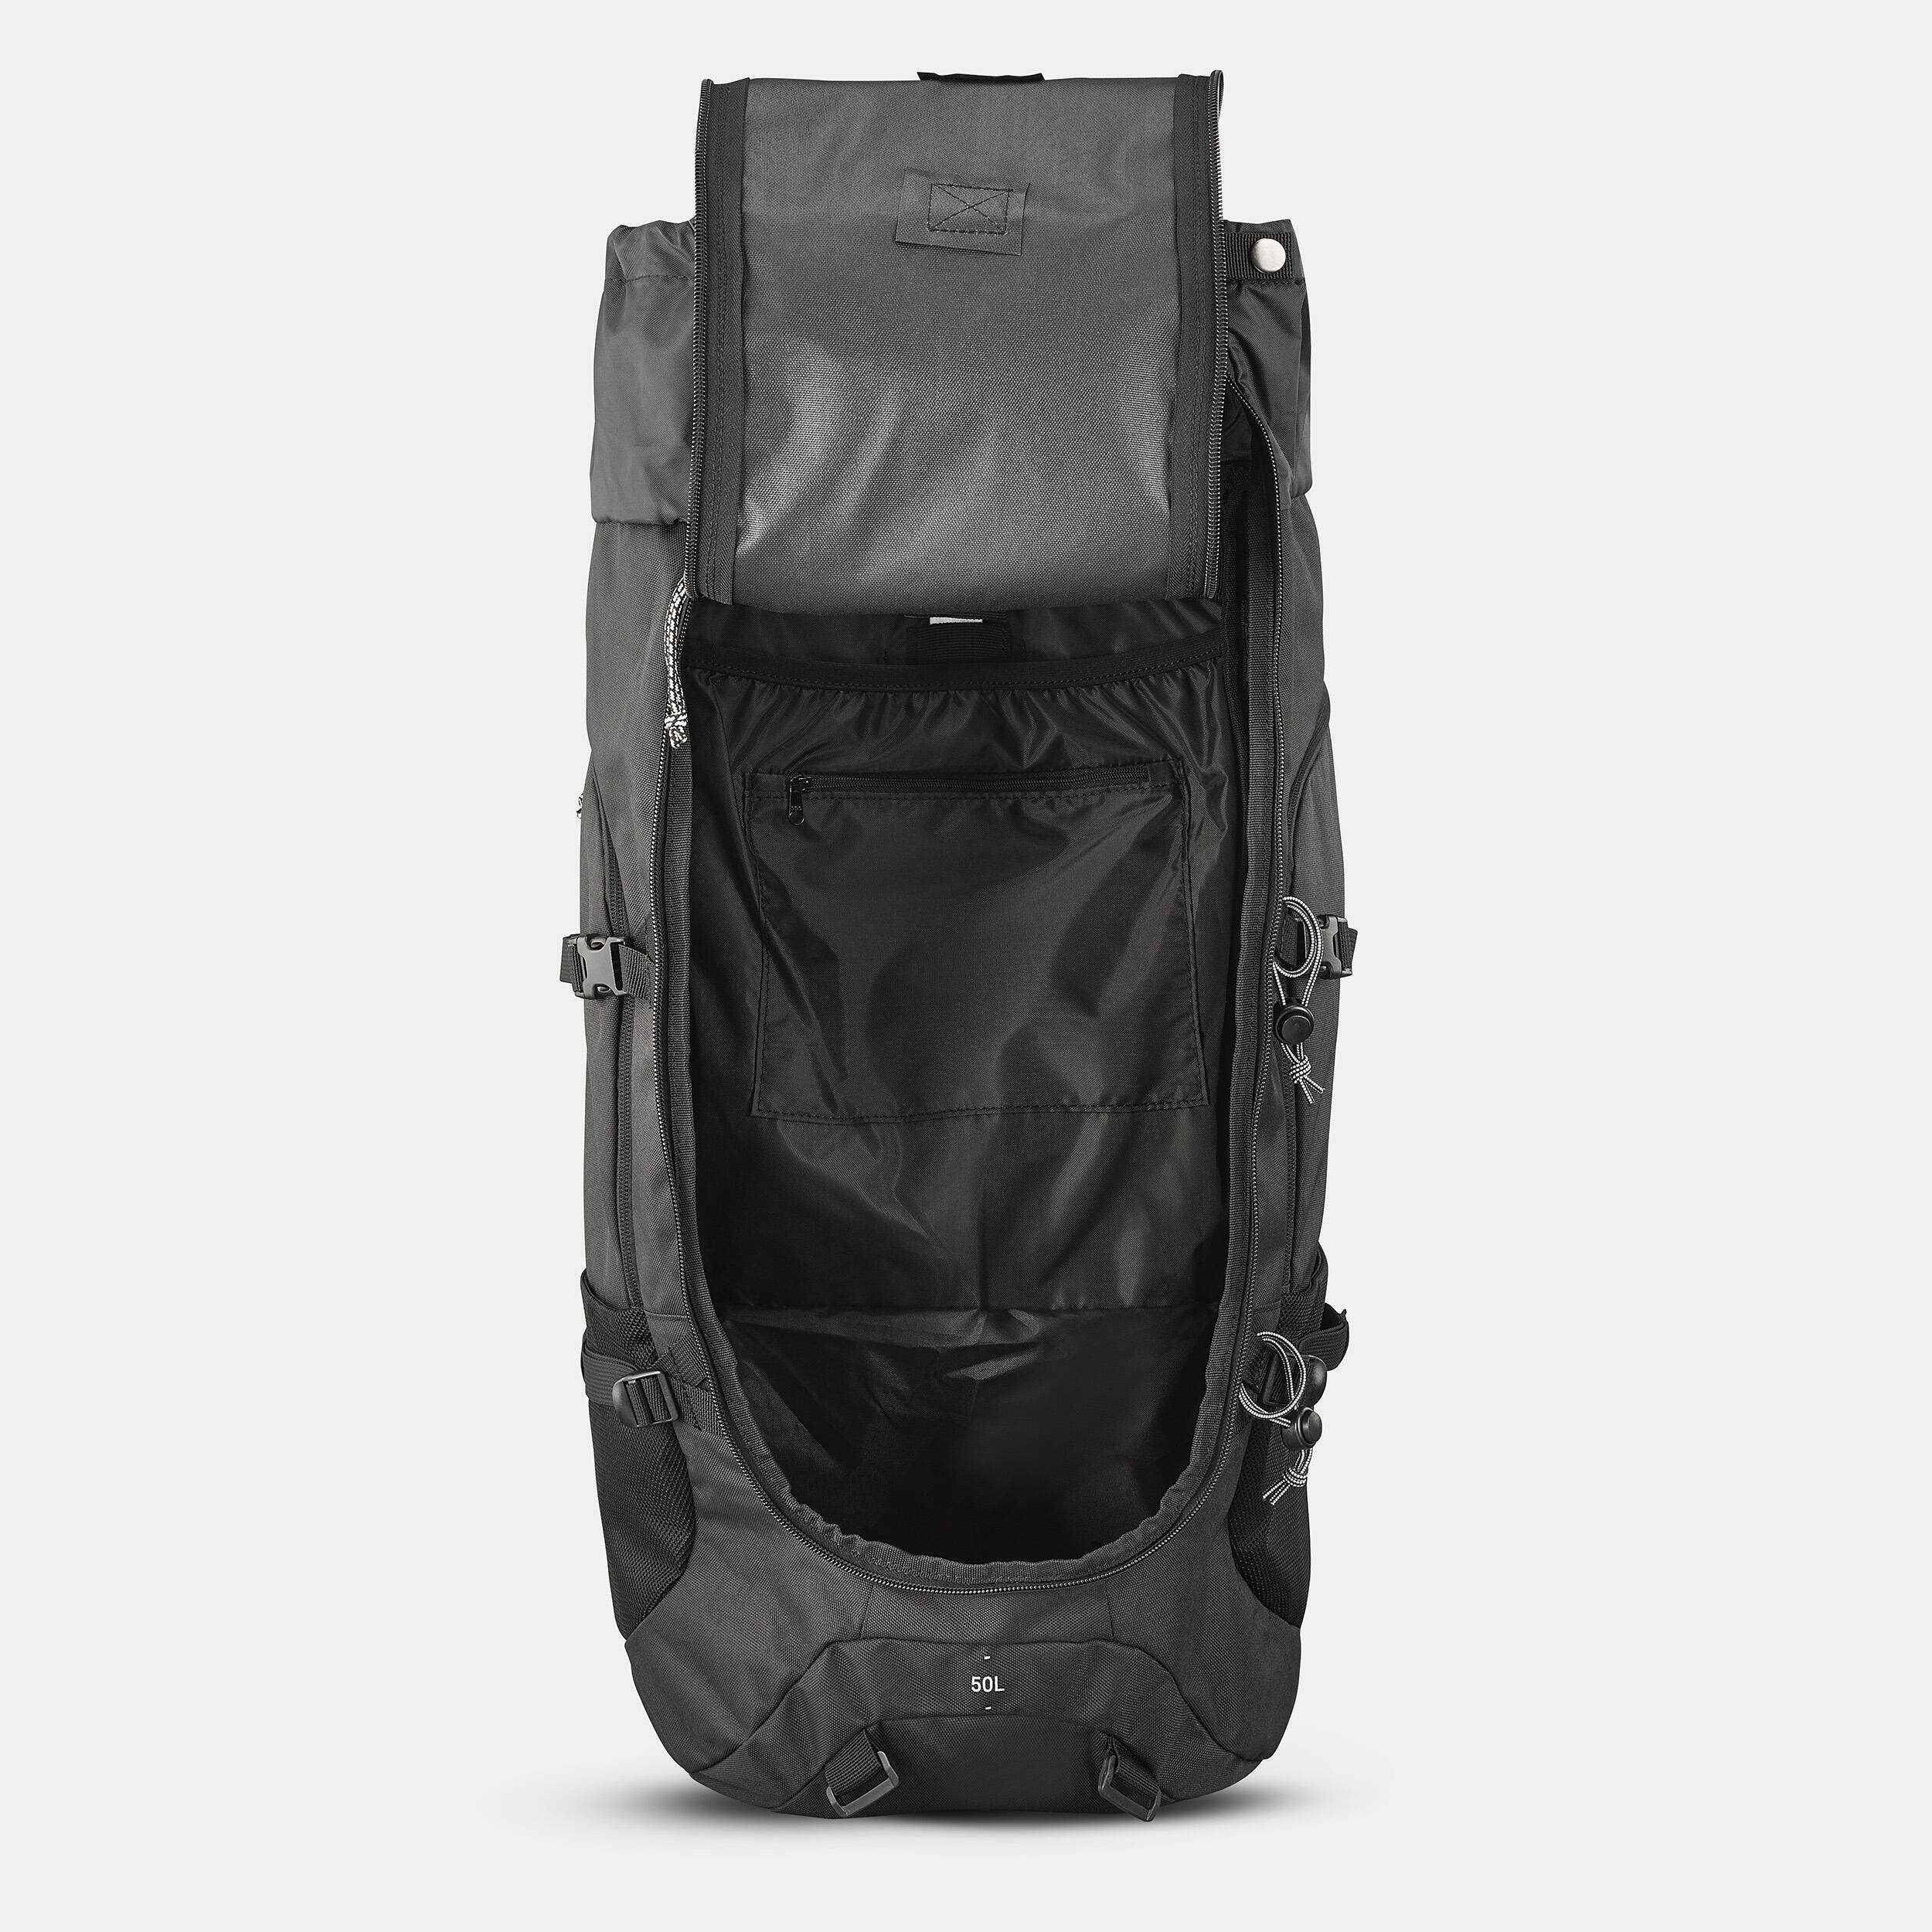 Travel backpack 50L - Travel 100 8/19